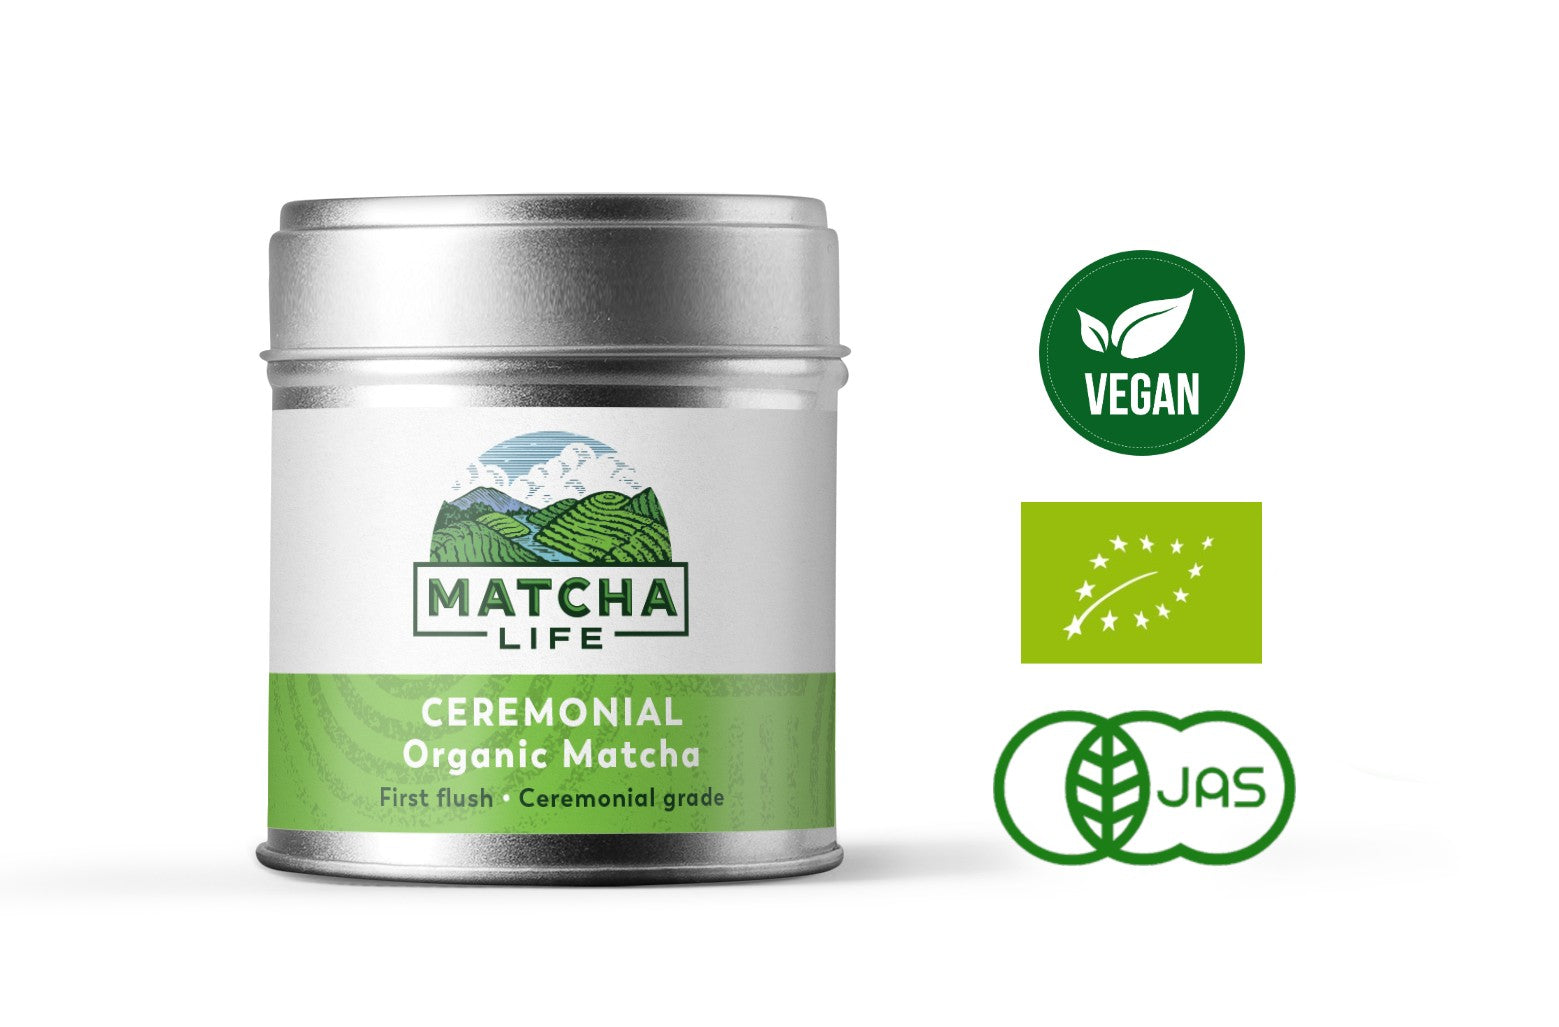 30gx3SET Japanese Organic Matcha【 Ceremonial Grade】 Matcha Green Tea Powder  BI